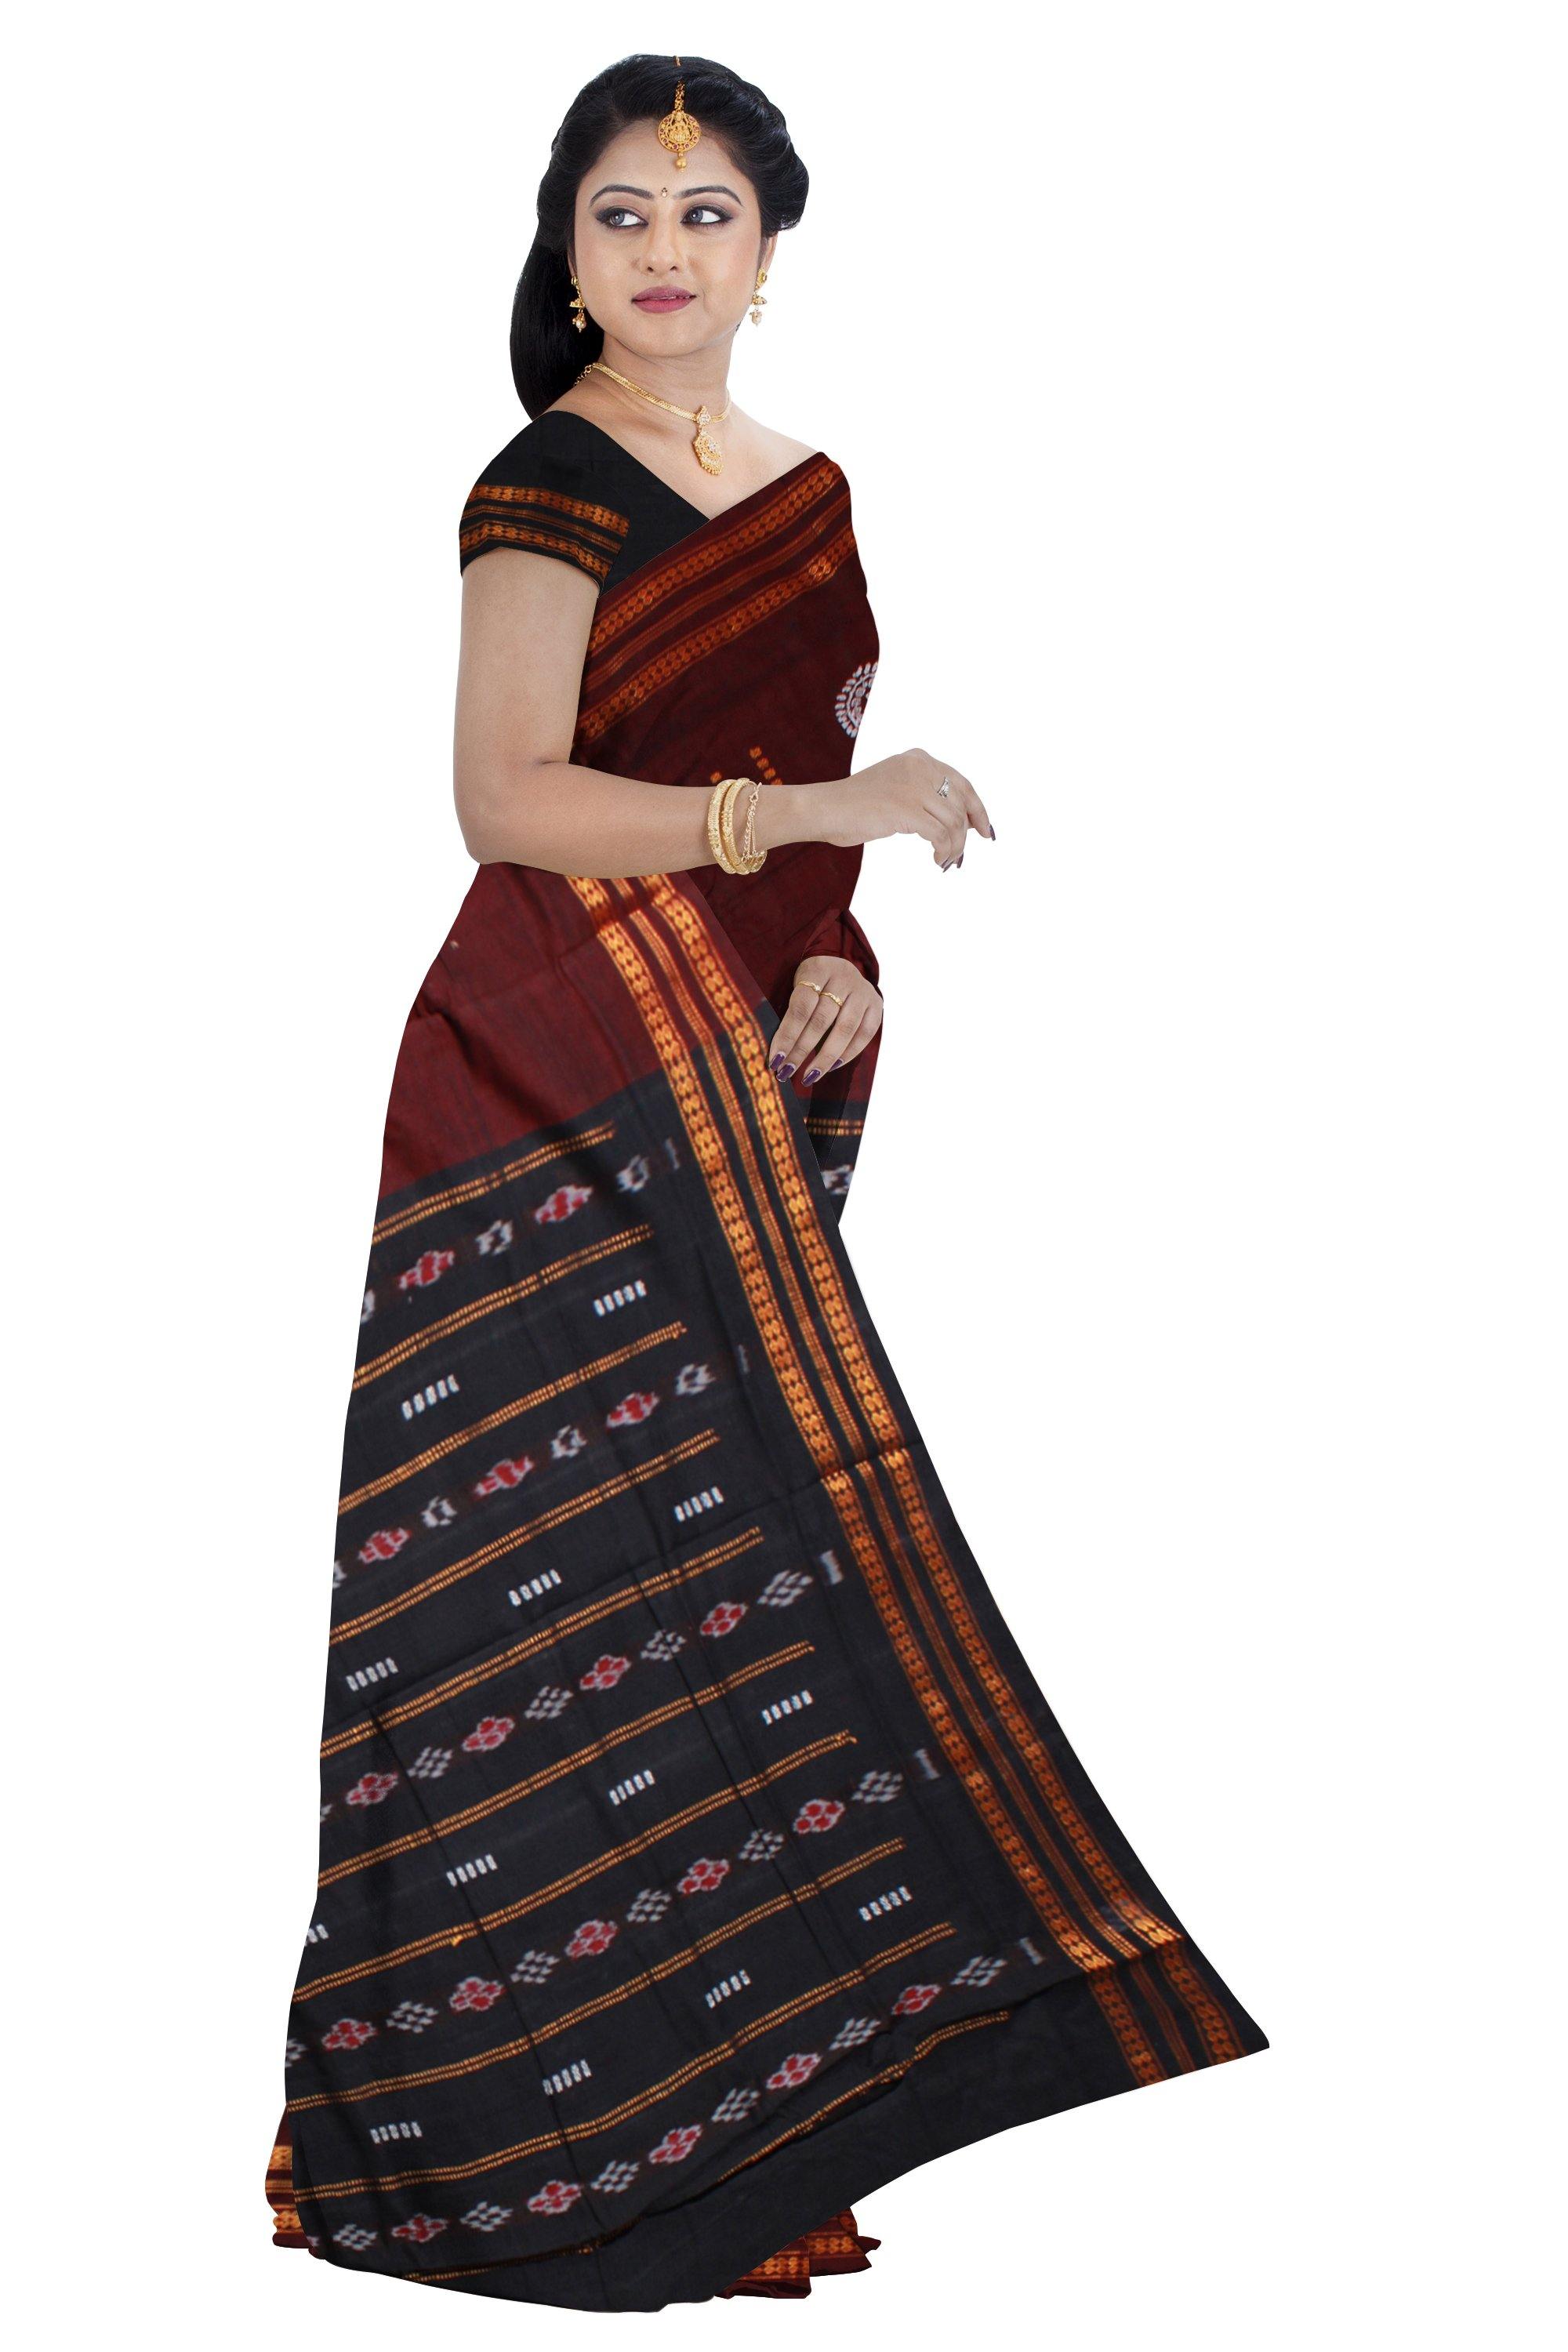 Sambalpuri Bomkei pattern flower print saree in DARK BROWN color without blouse piece - Koshali Arts & Crafts Enterprise